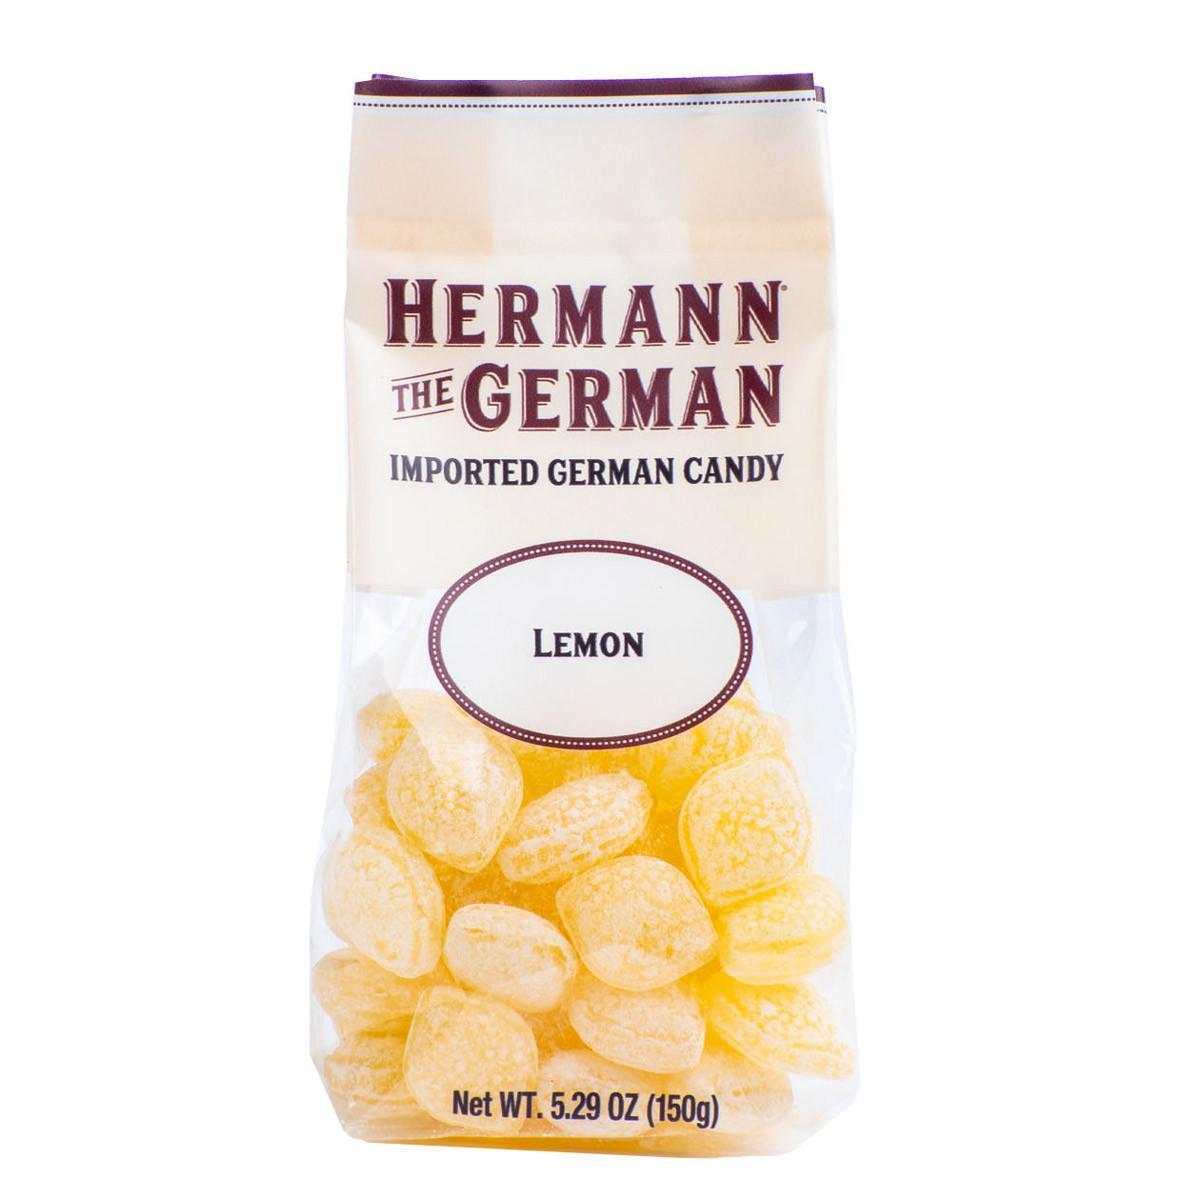 Hermann the German Lemon Hard Candy